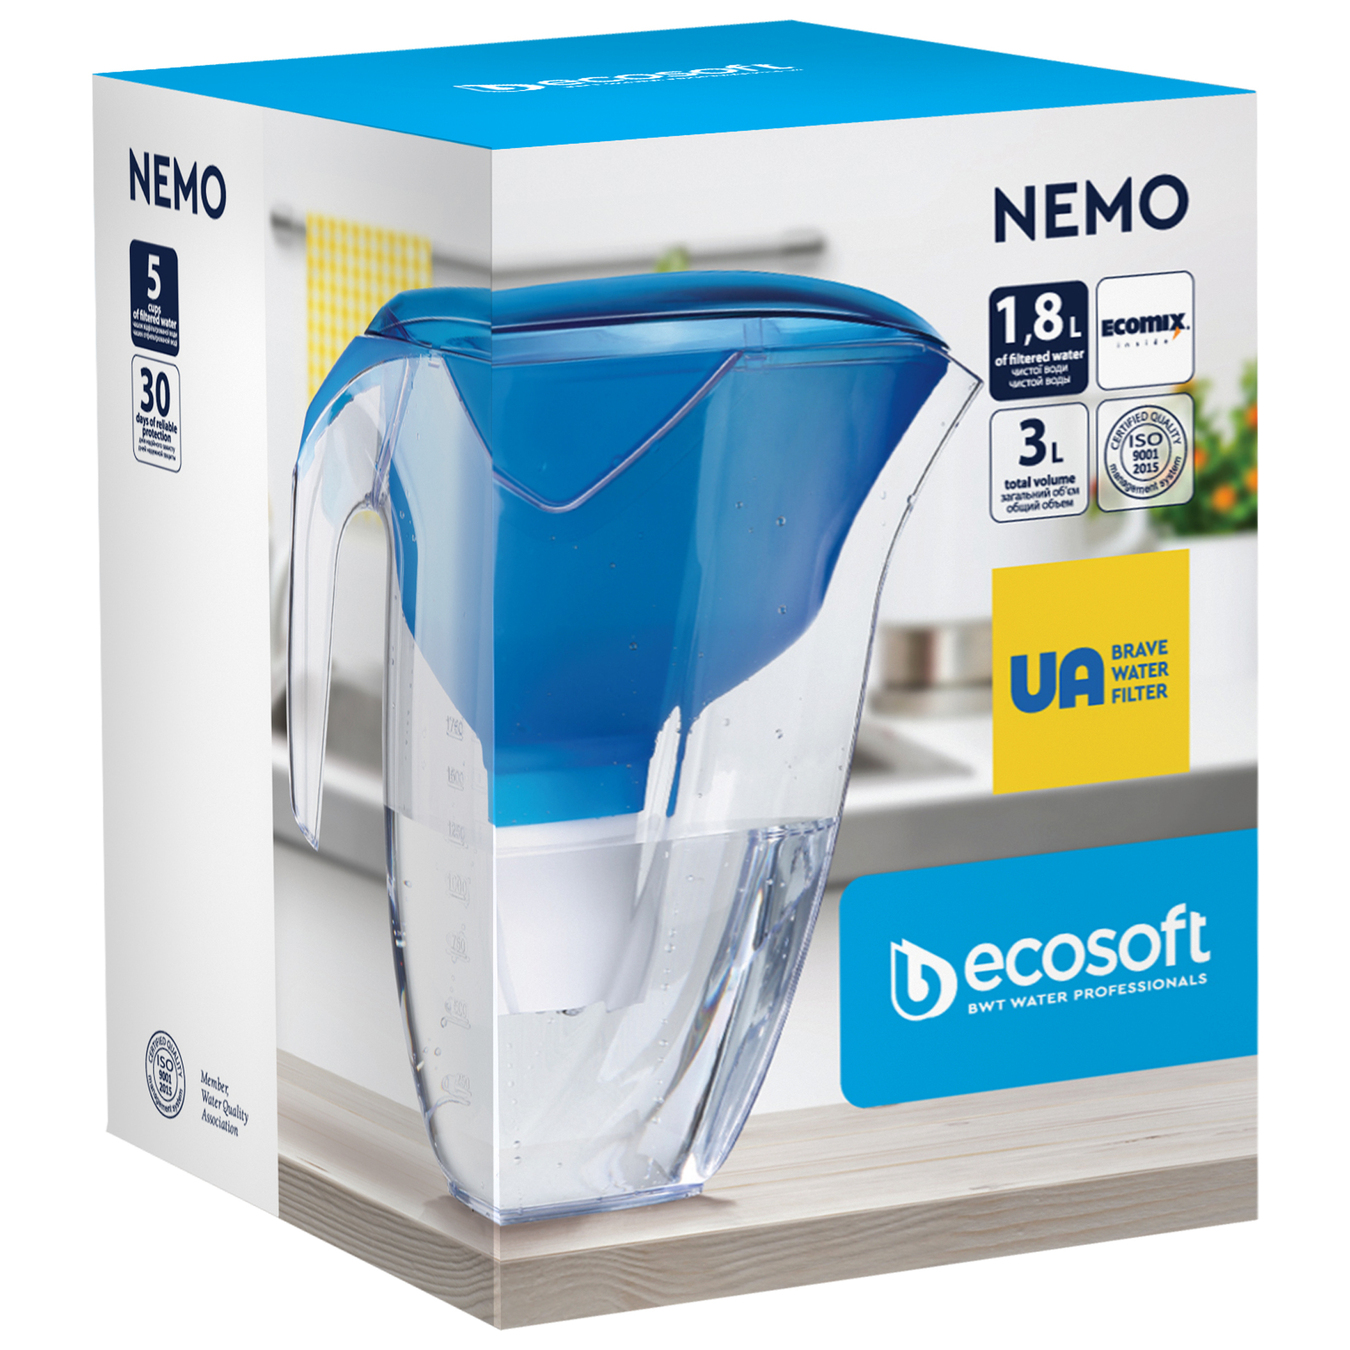 Filter-jug Ecosoft Nemo blue 3l 2